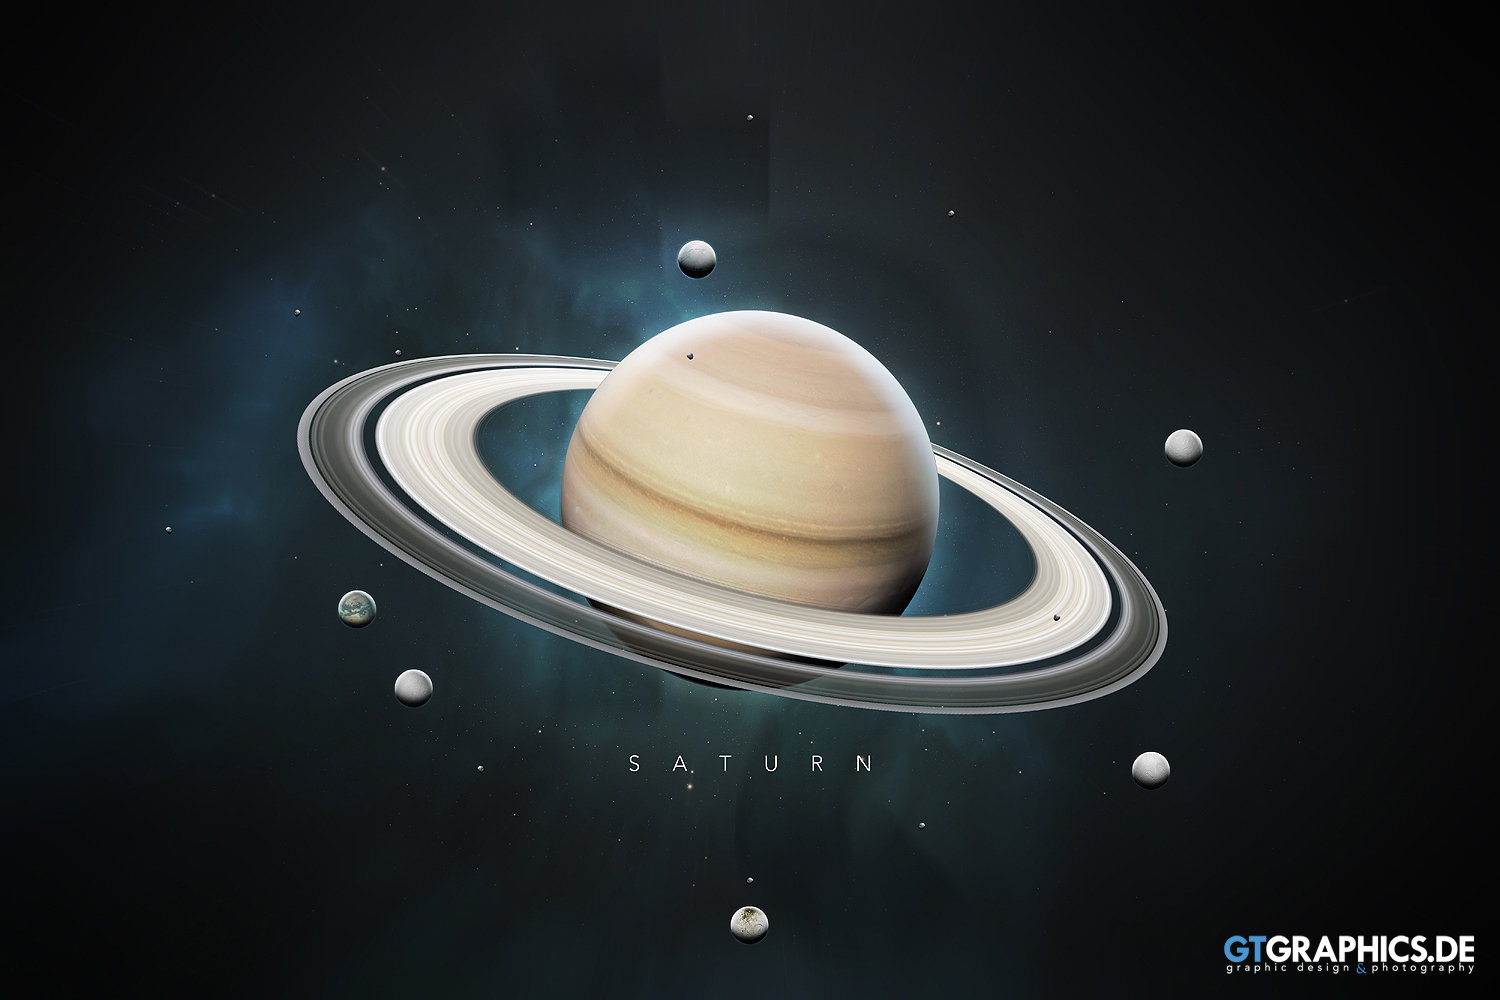 The Solar System Saturn